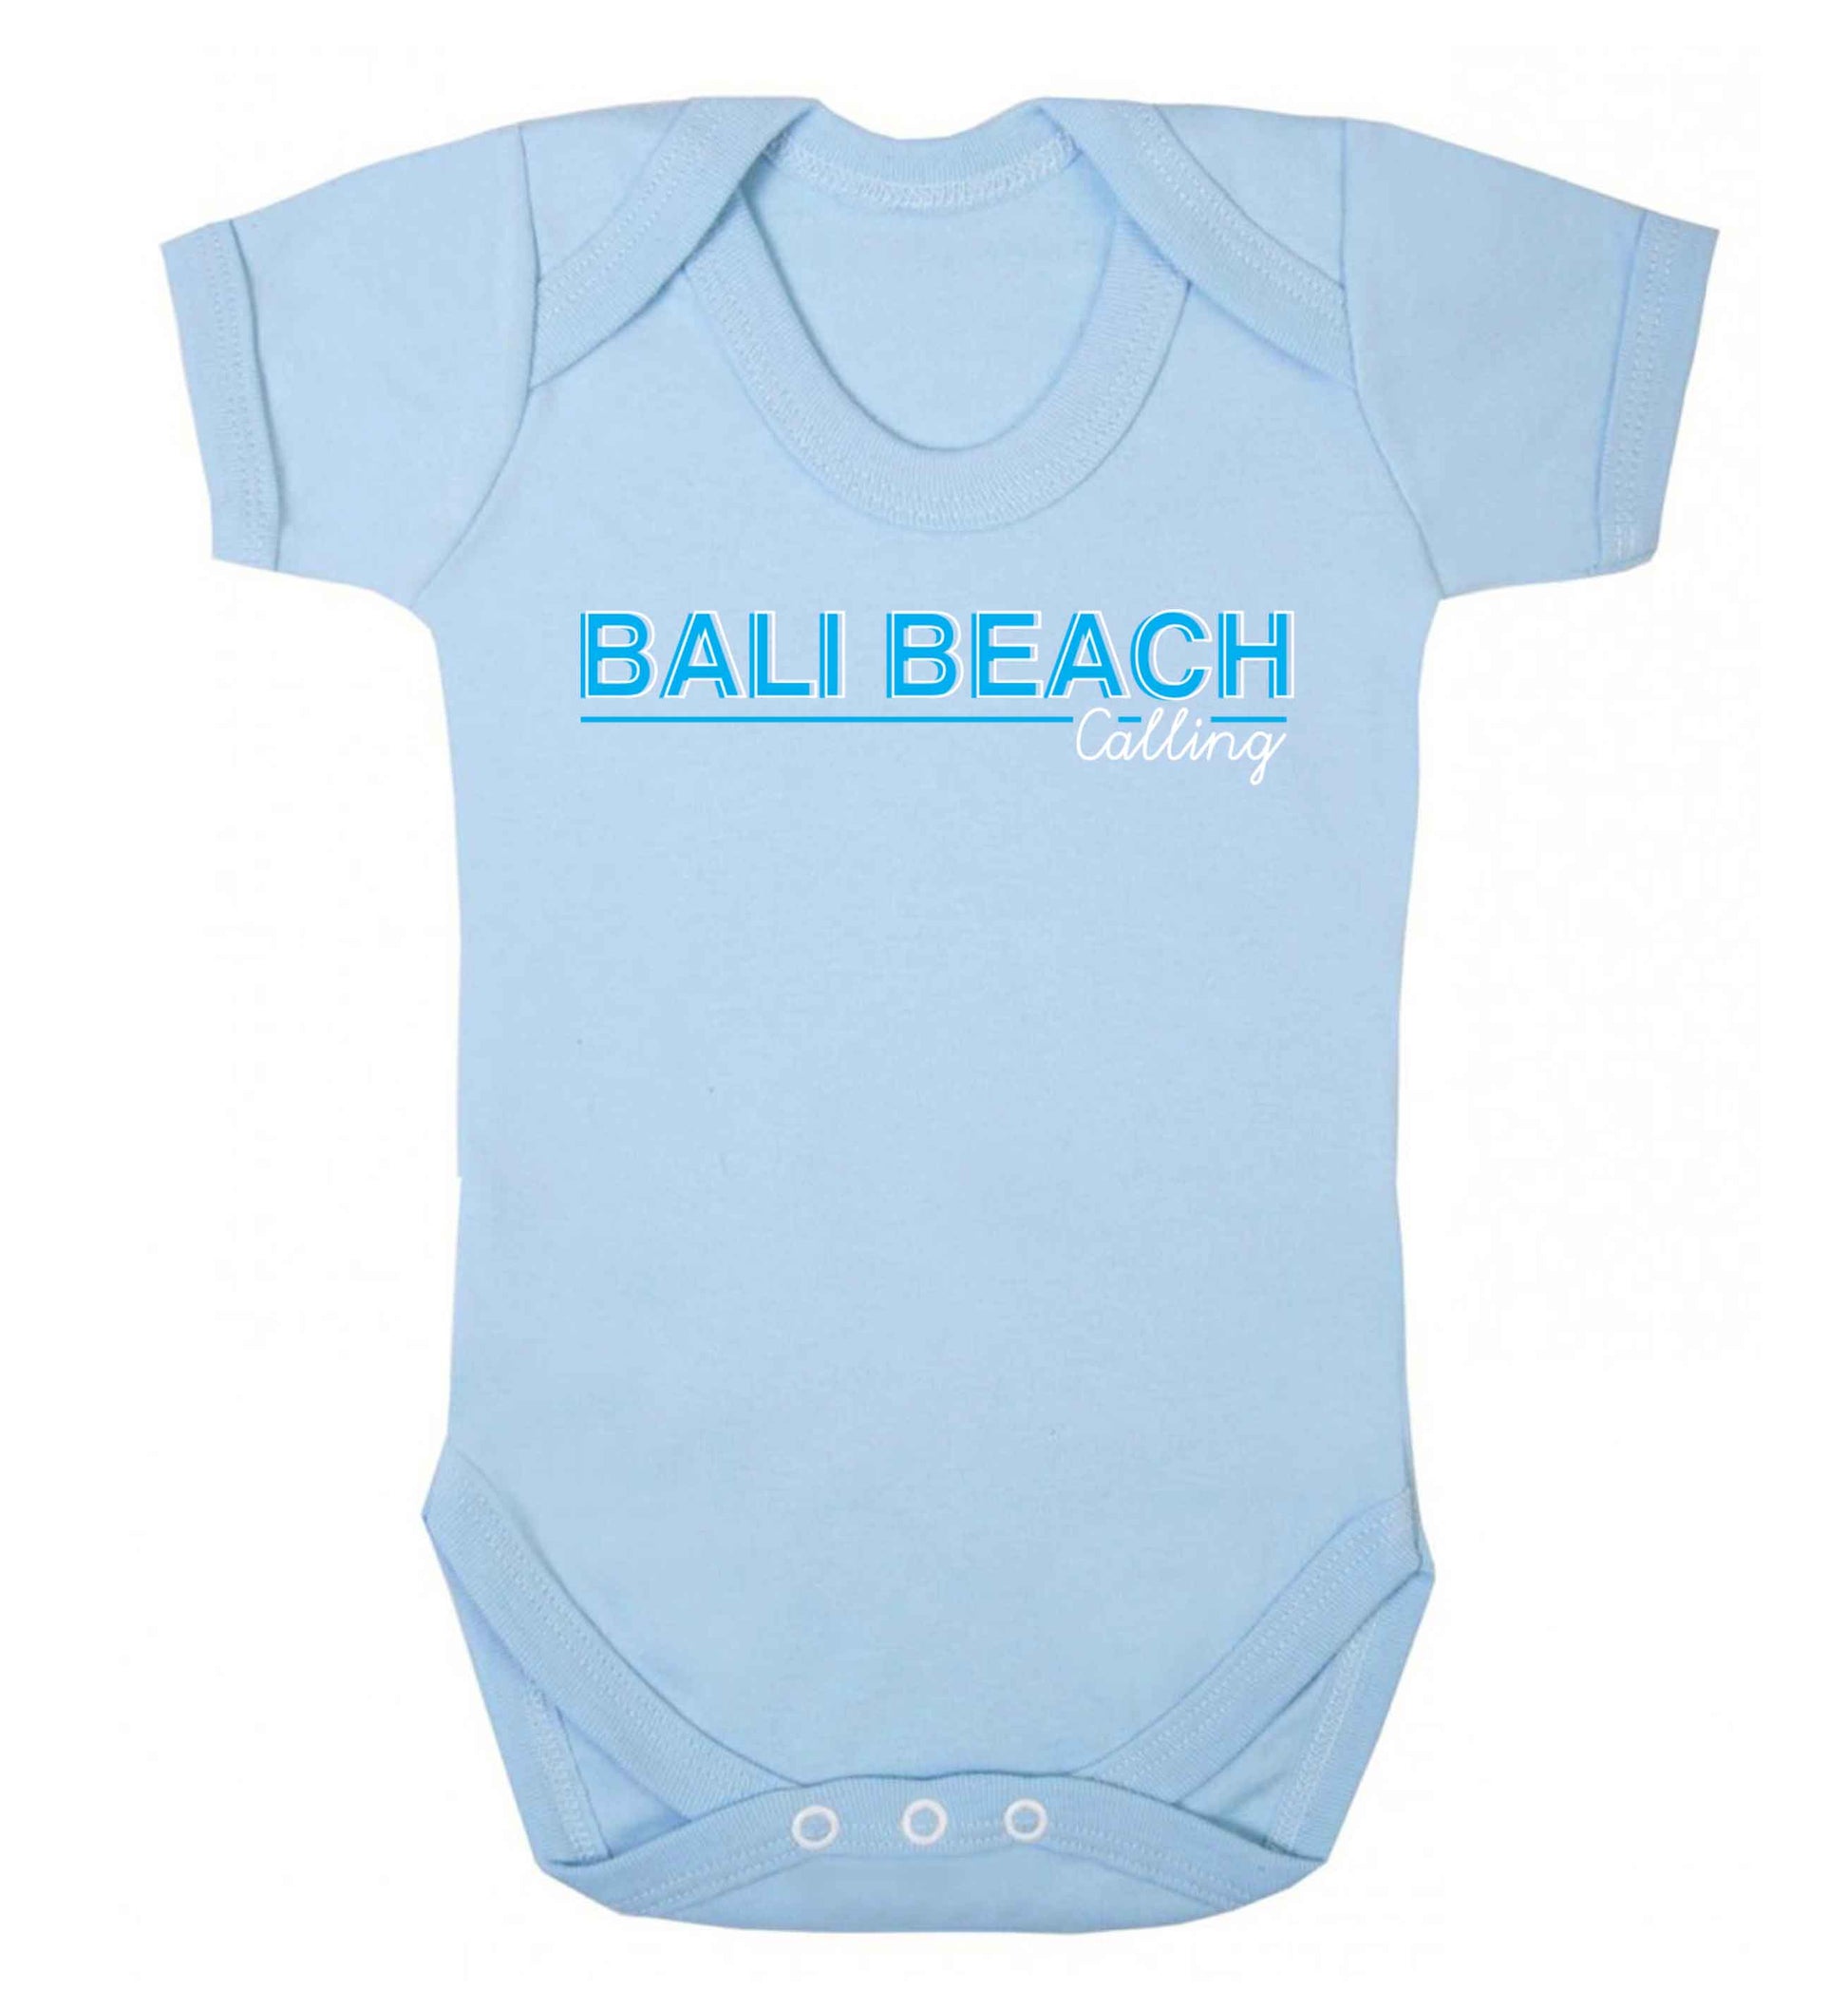 Bali beach calling Baby Vest pale blue 18-24 months